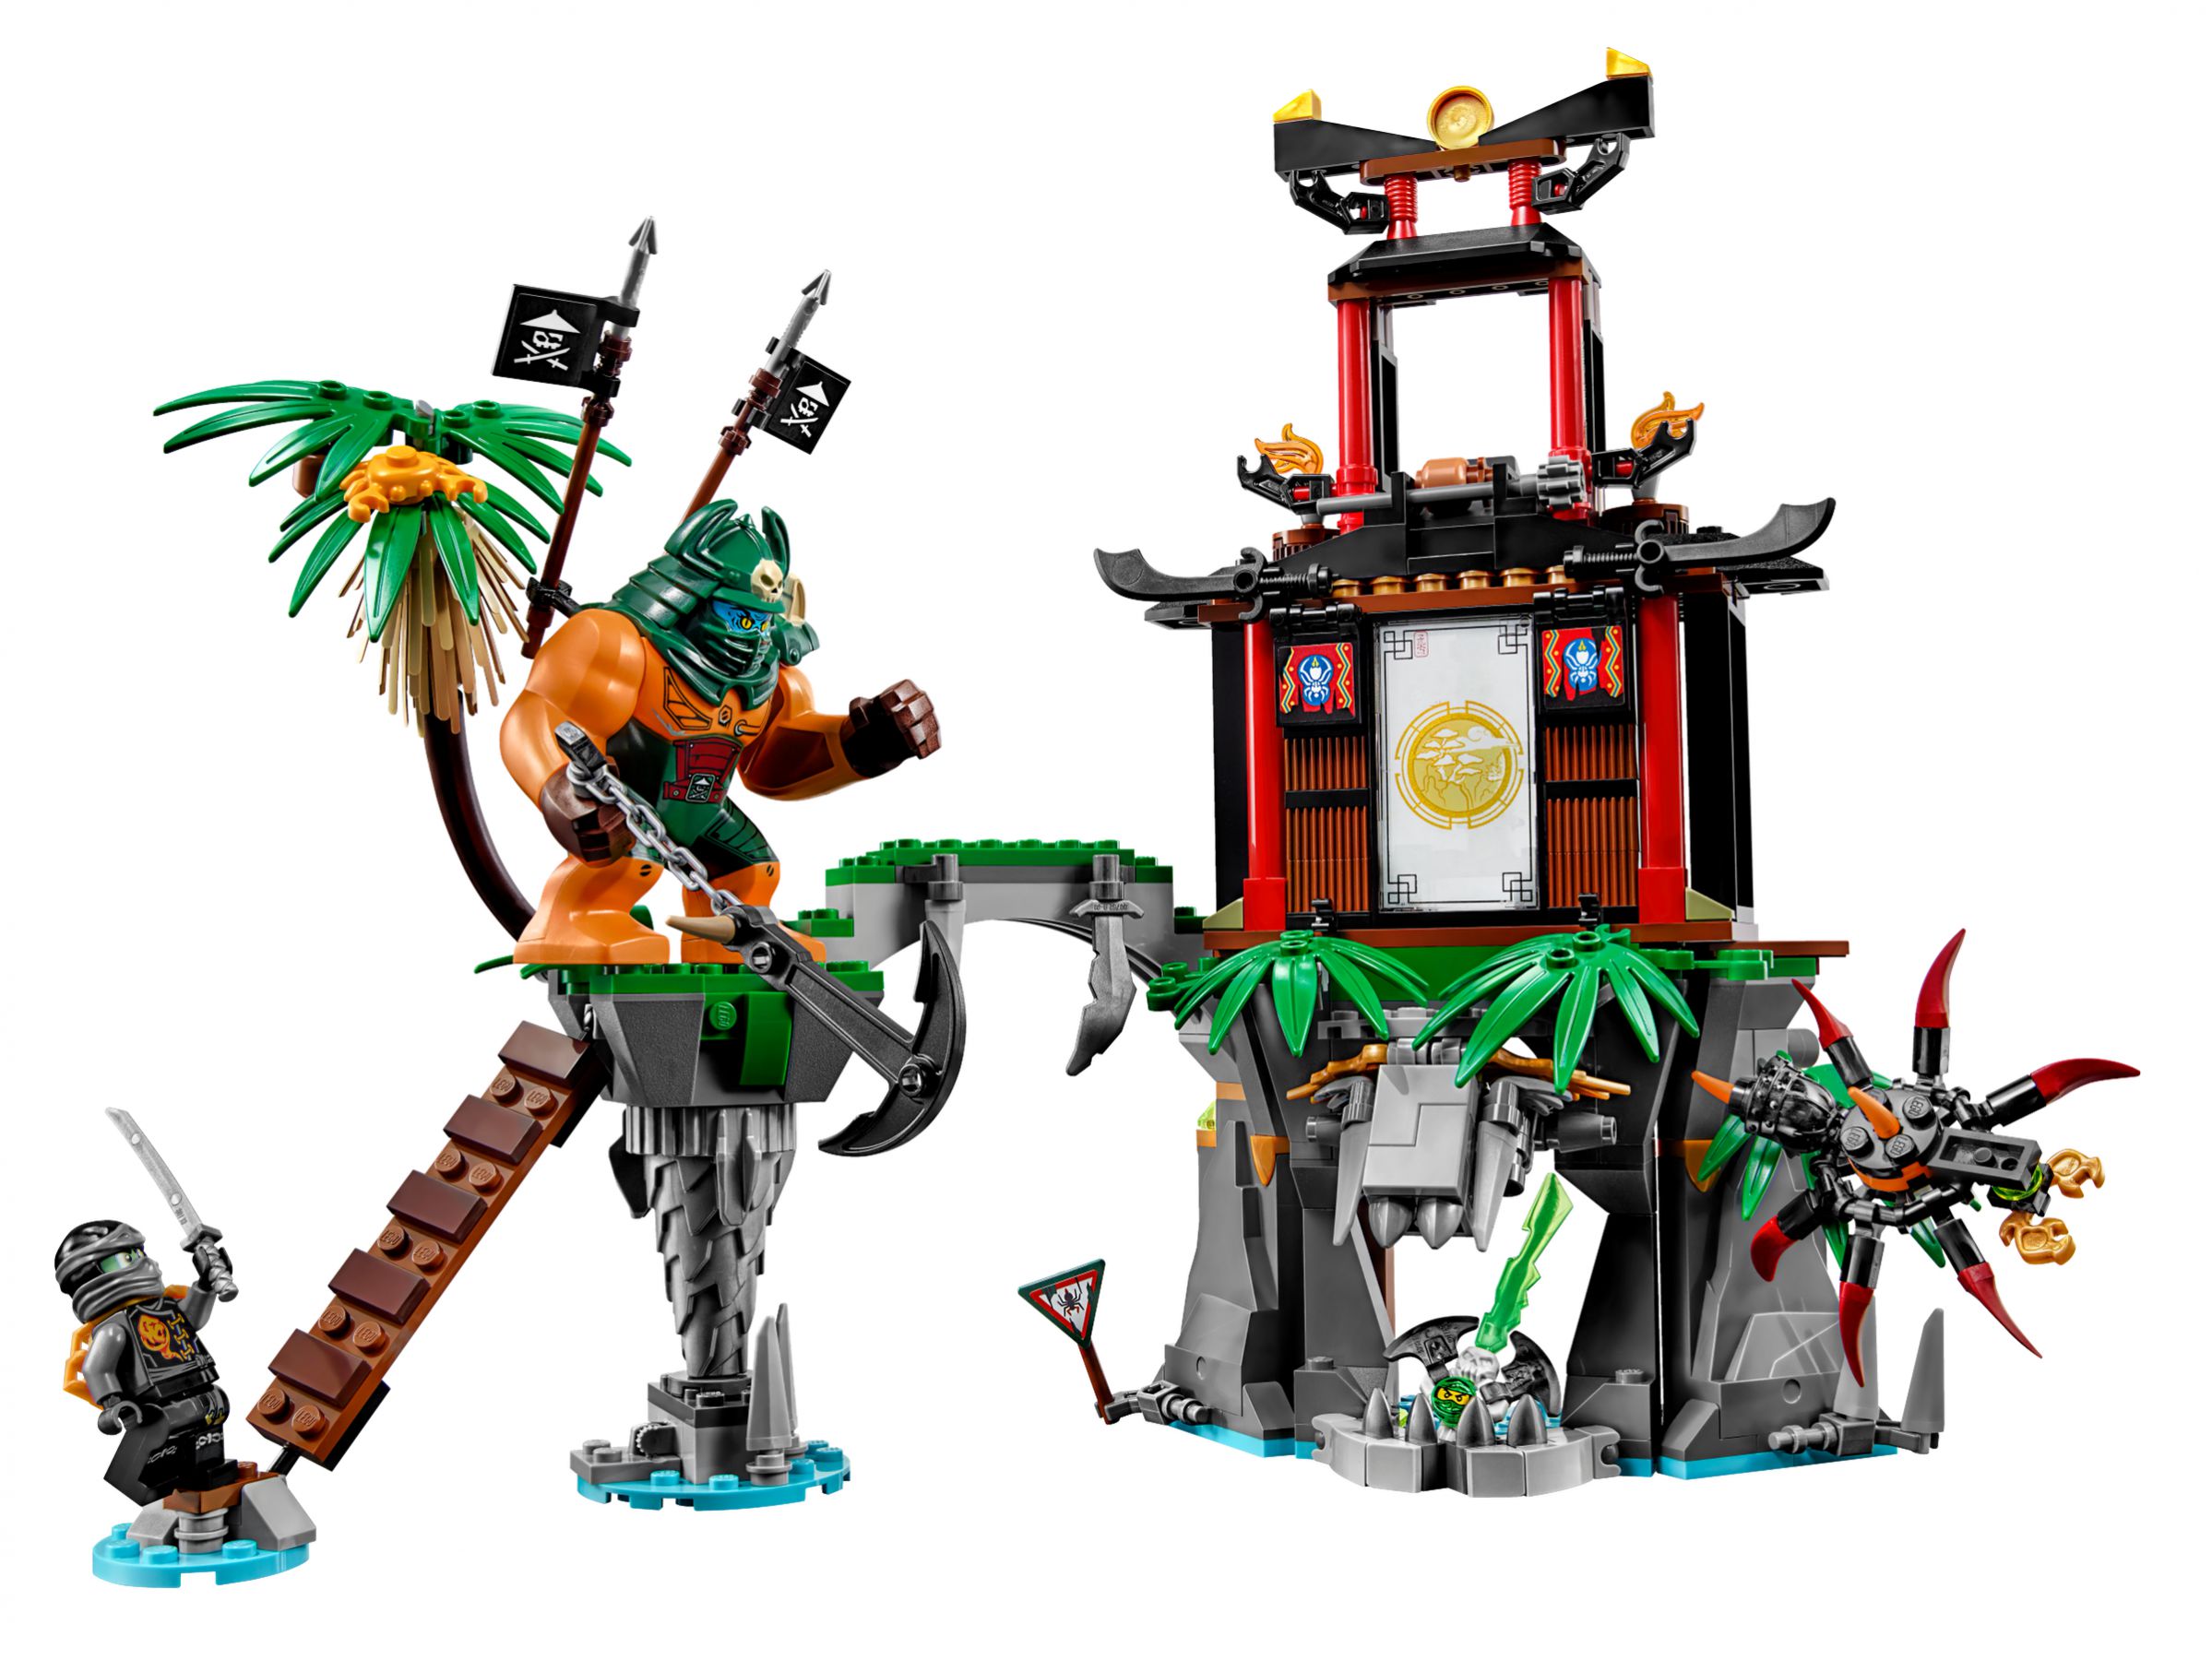 LEGO Ninjago 70604 Schwarze Witwen-Insel LEGO_70604_alt2.jpg